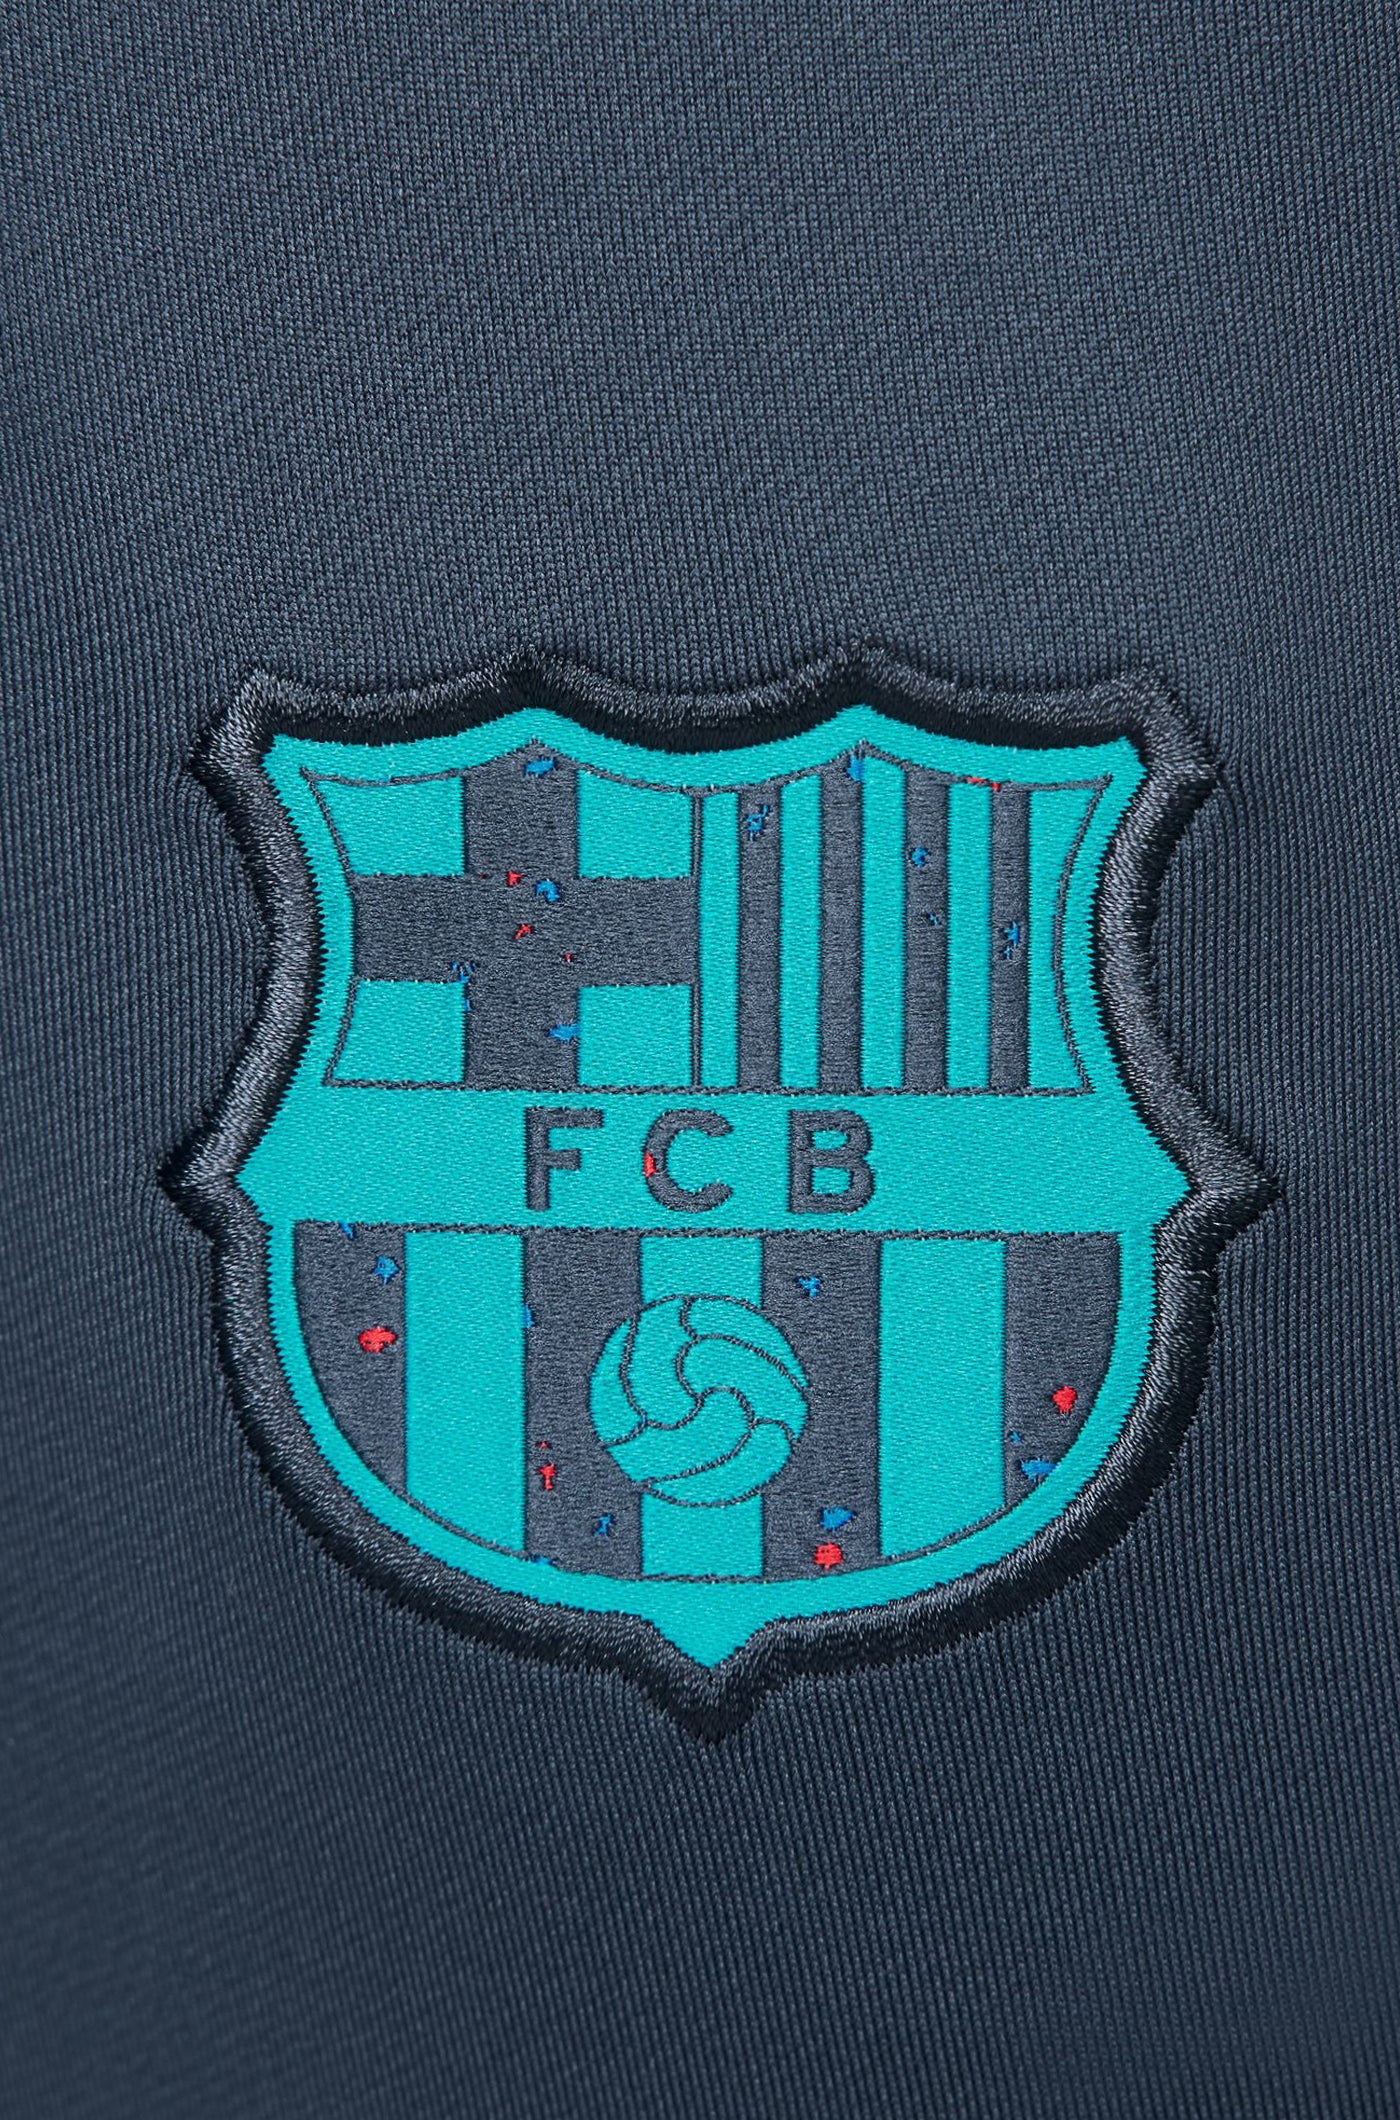 Pantalons entrenament FC Barcelona 23/24 - Dona